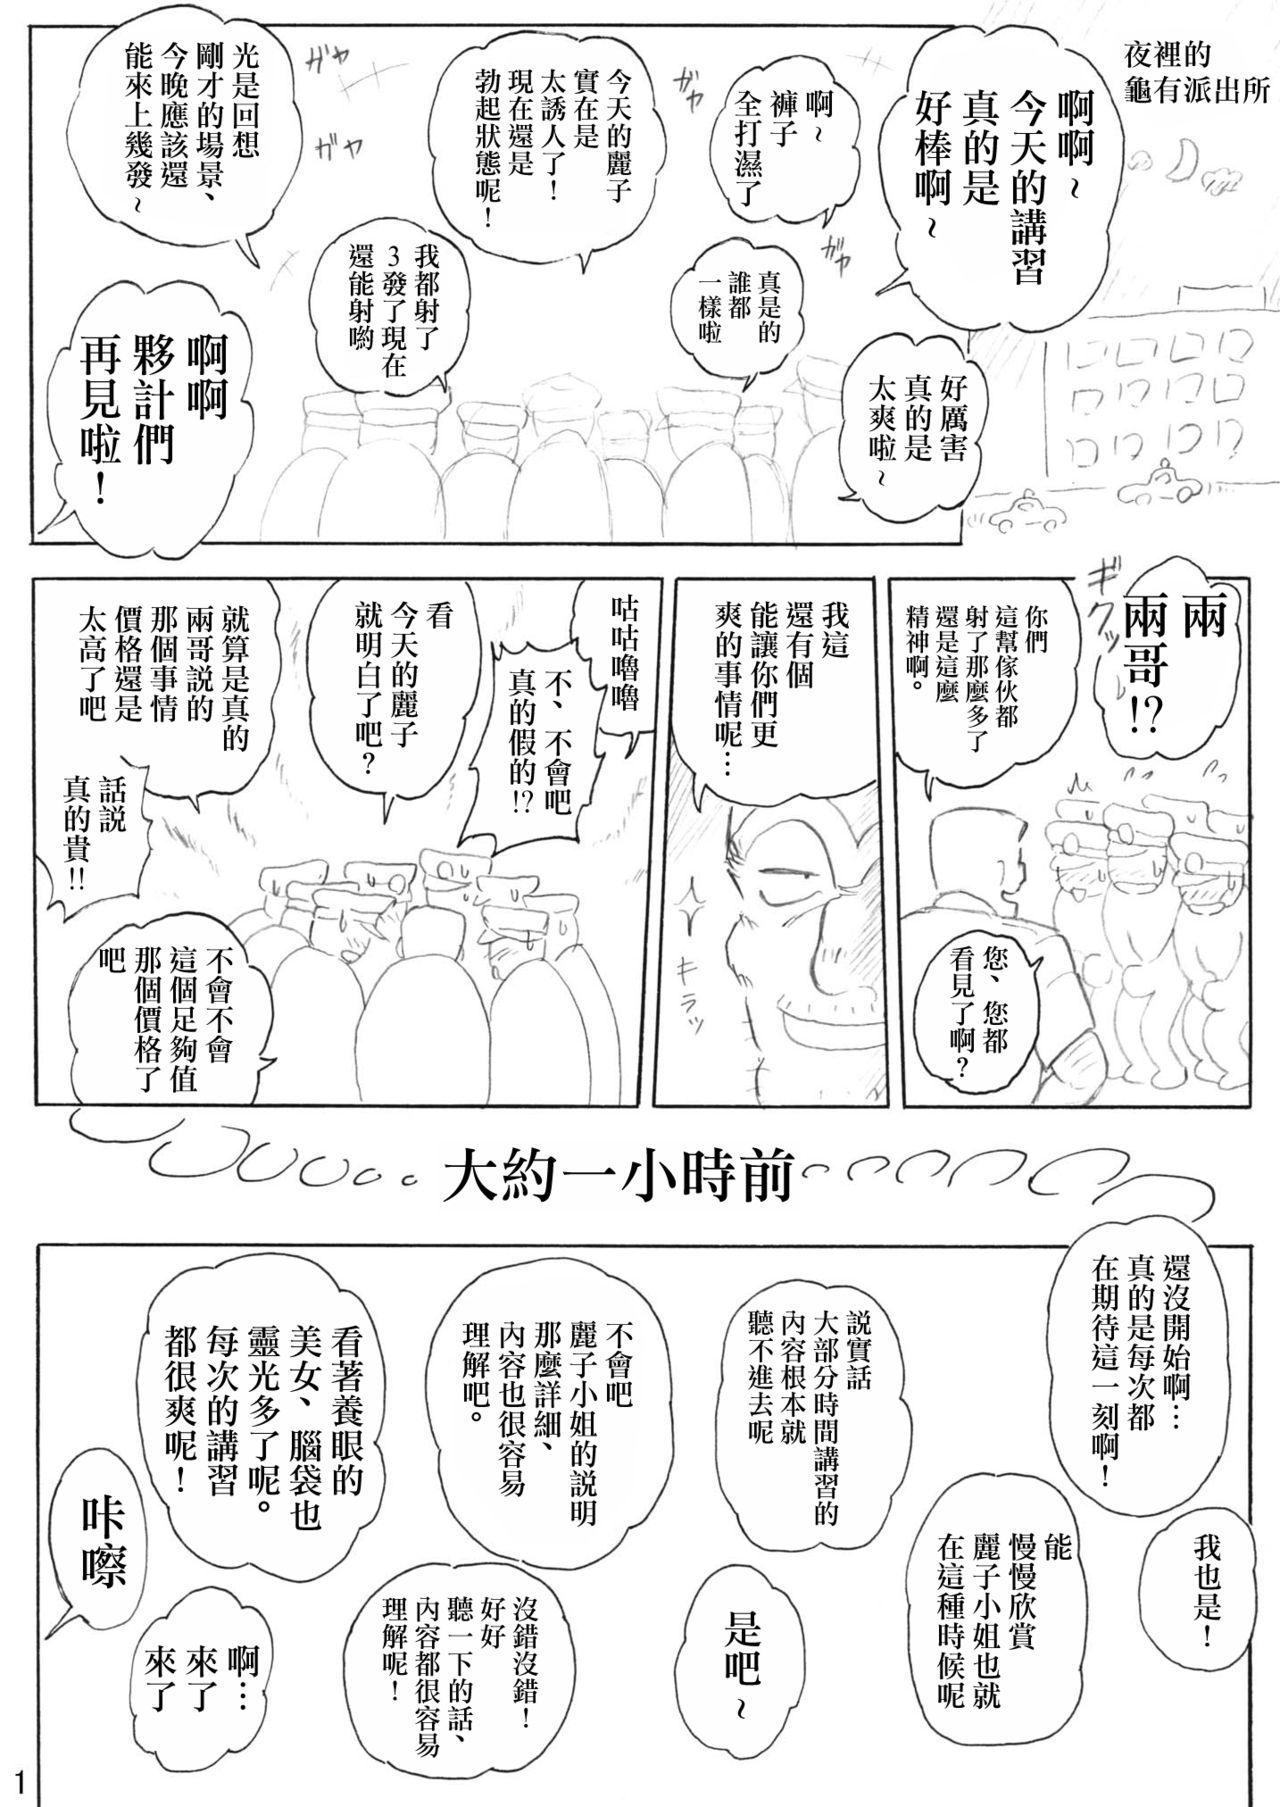 Pure18 Uchiage Suihanki Gogou Ki Tsuika Rocket - Kochikame Doublepenetration - Page 2